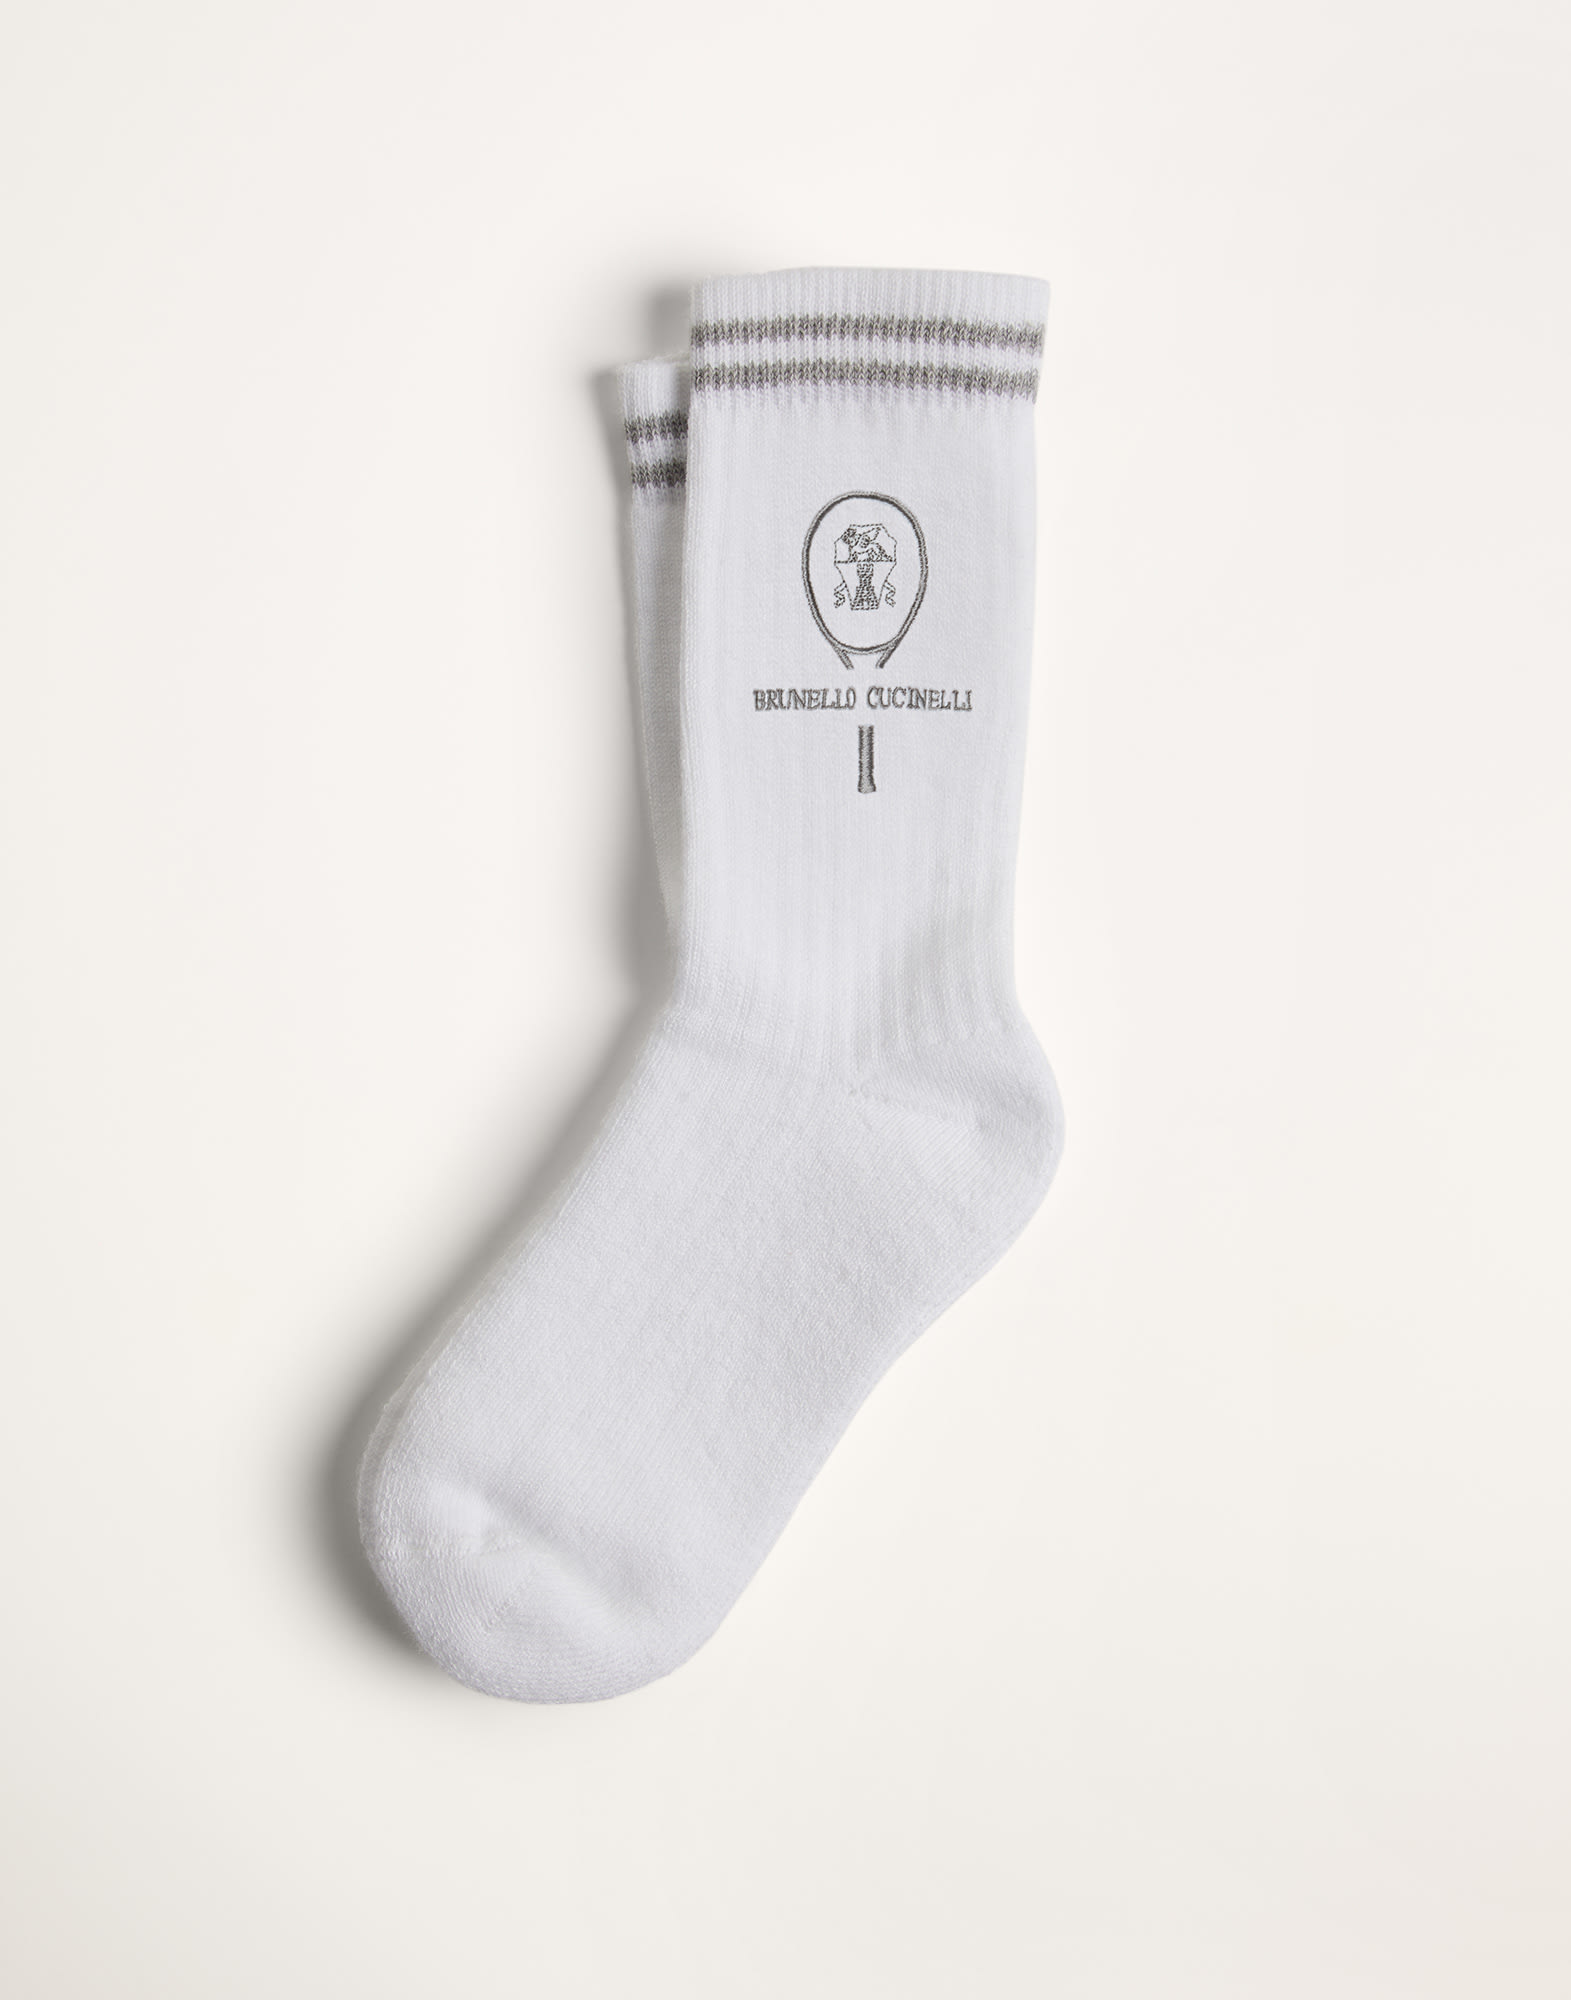 Socks with Tennis logo